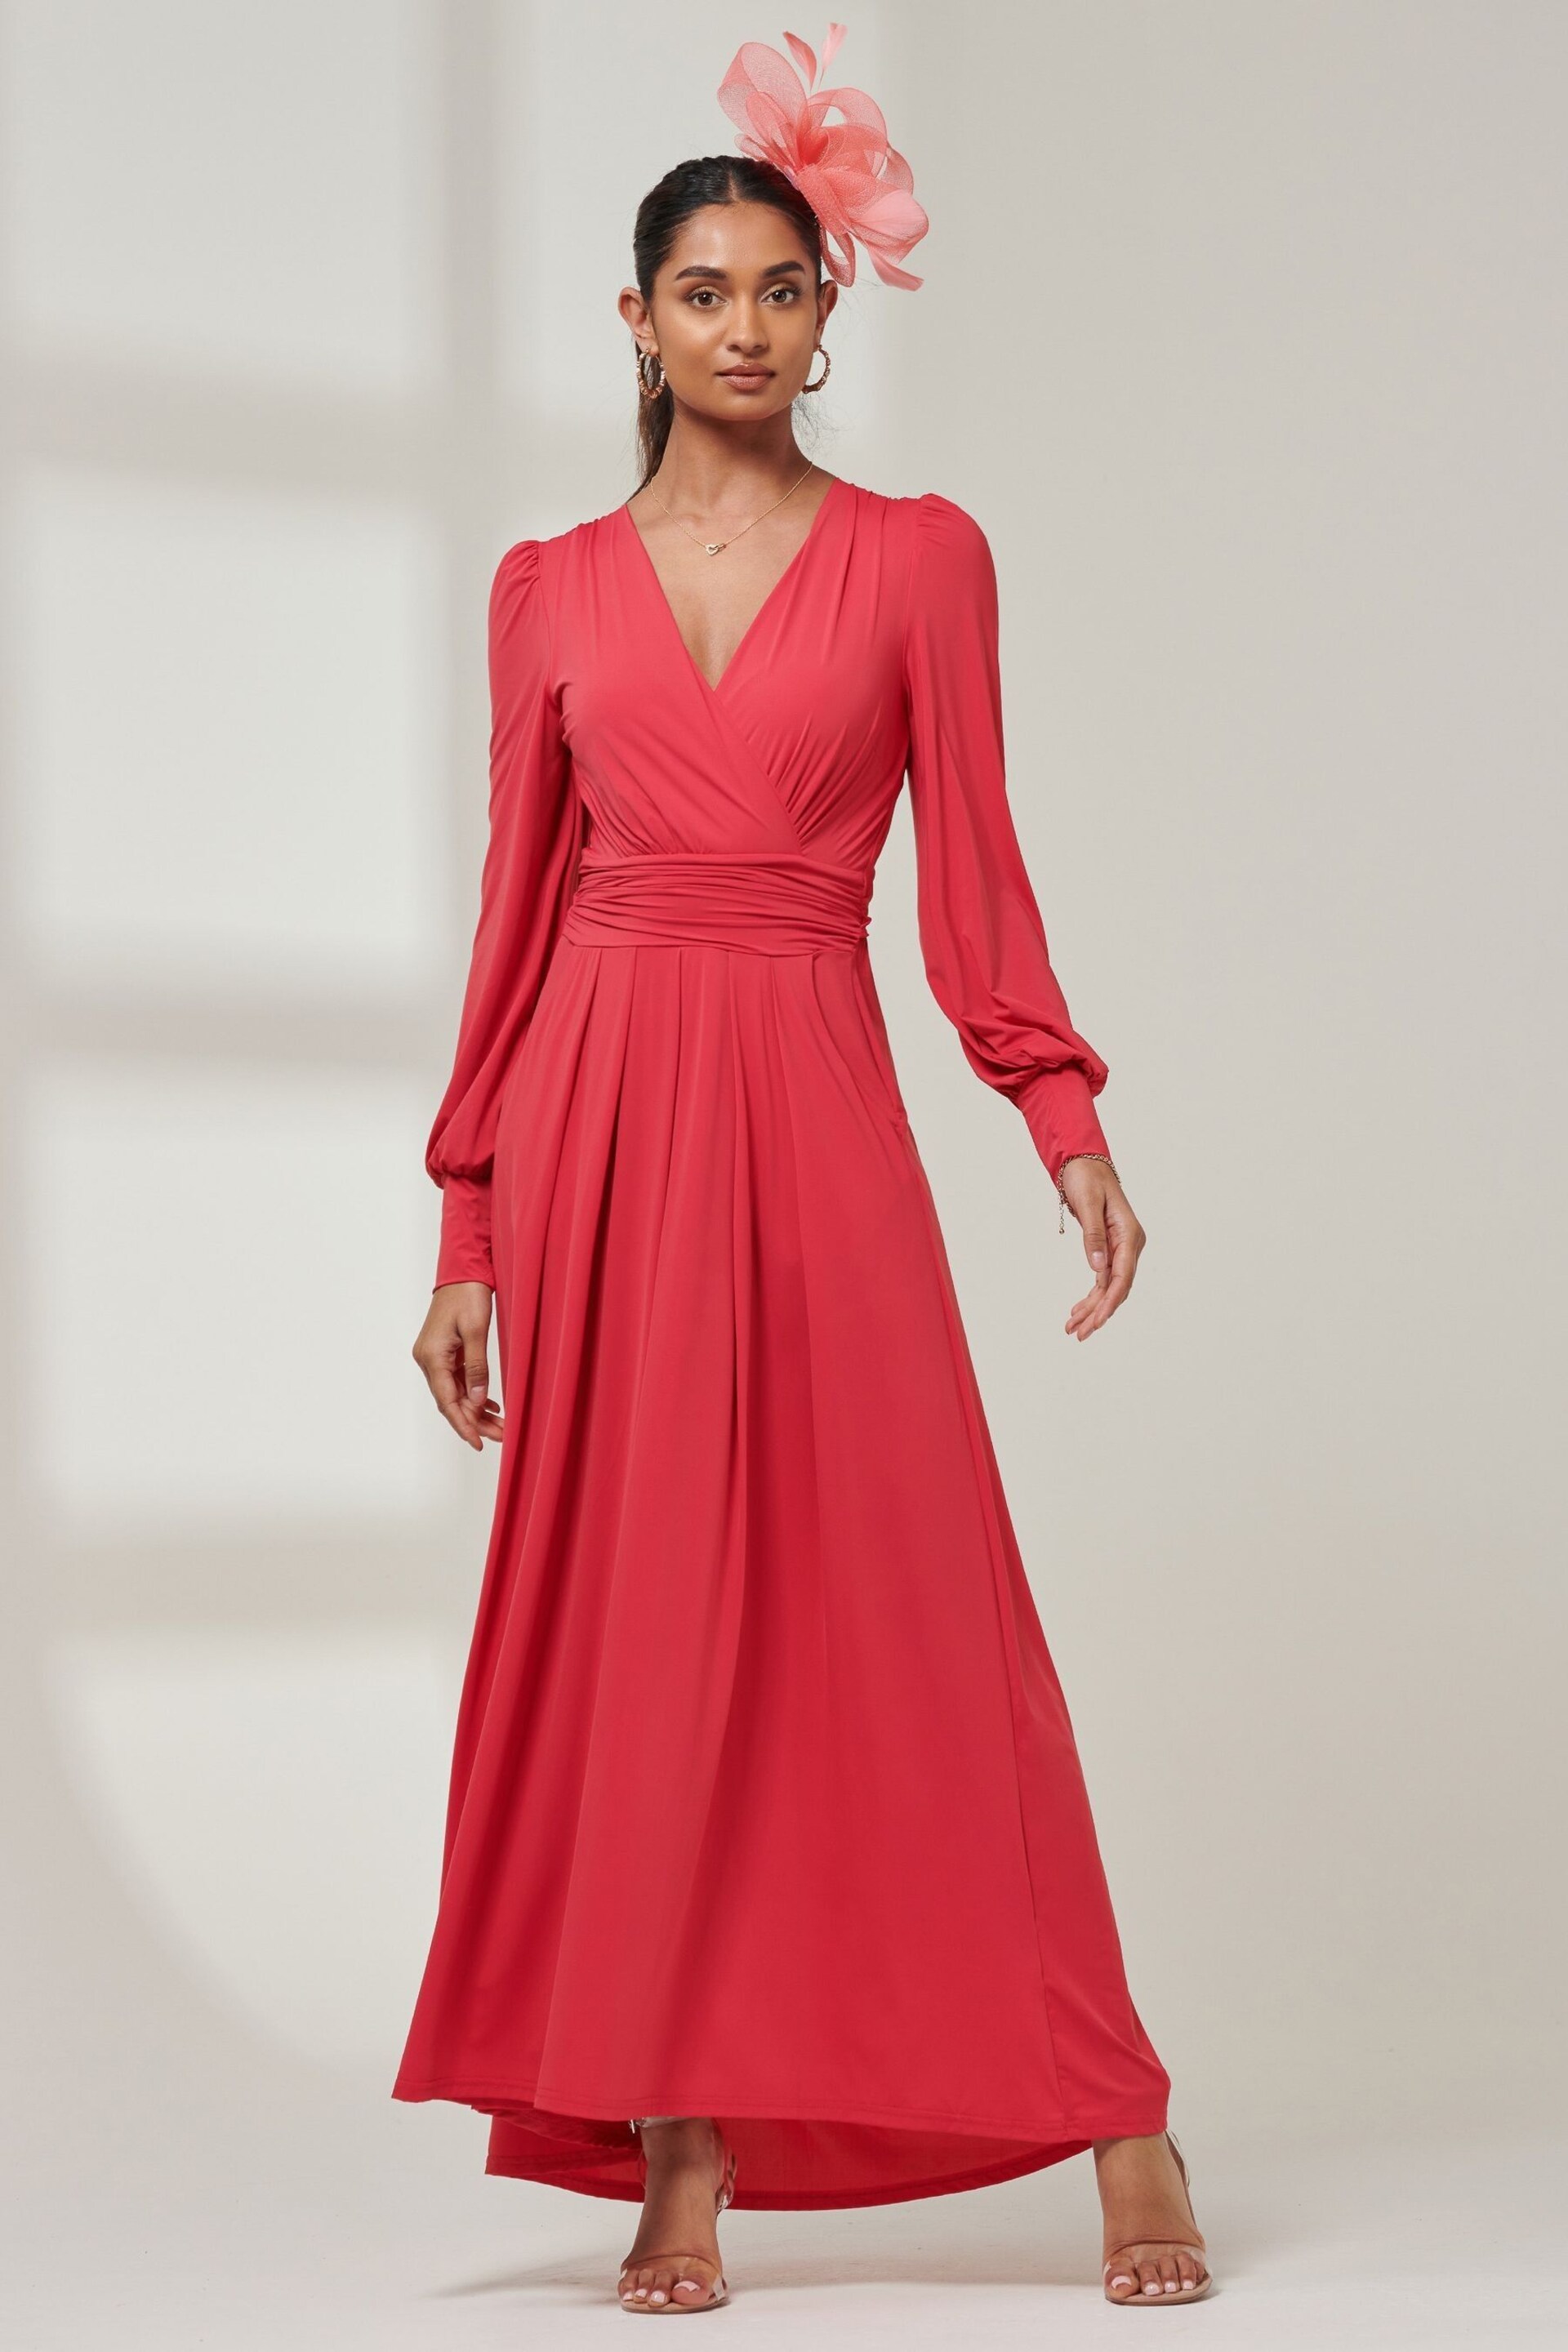 Jolie Moi Pink Tone Giulia Long Sleeve Maxi Dress - Image 5 of 5